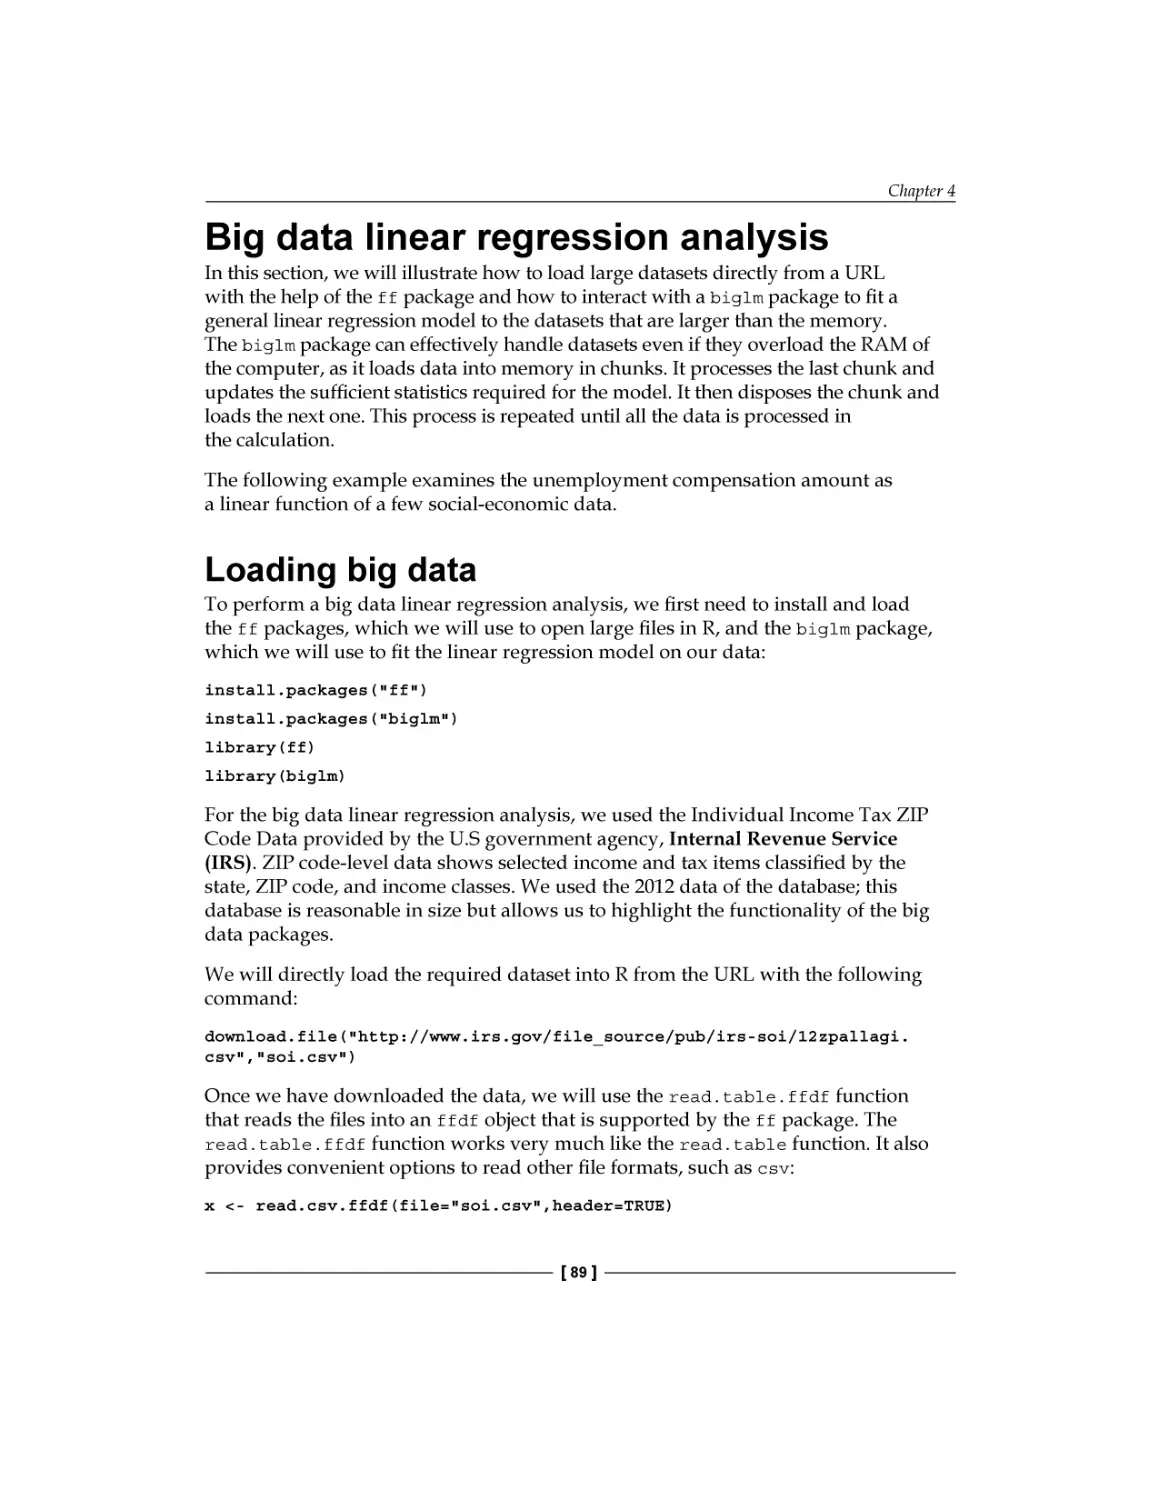 Big data linear regression analysis
Loading big data